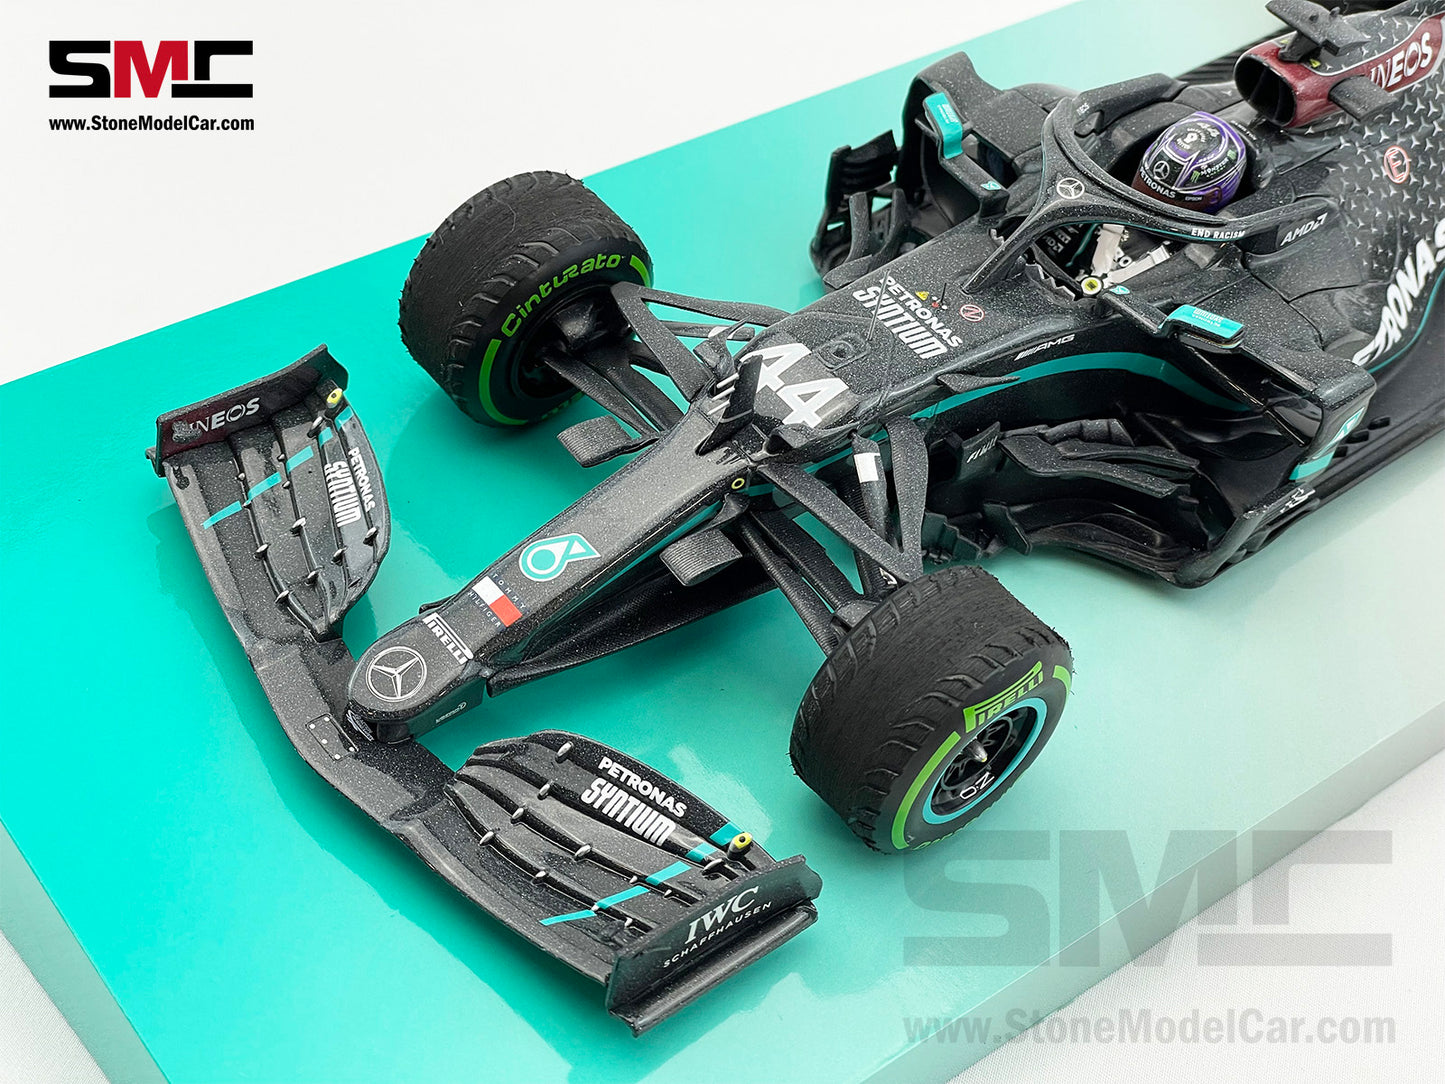 2020 7x World Champion Mercedes F1 W11 #44 Lewis Hamilton Turkey GP 1:18 MINICHAMPS Gift Box